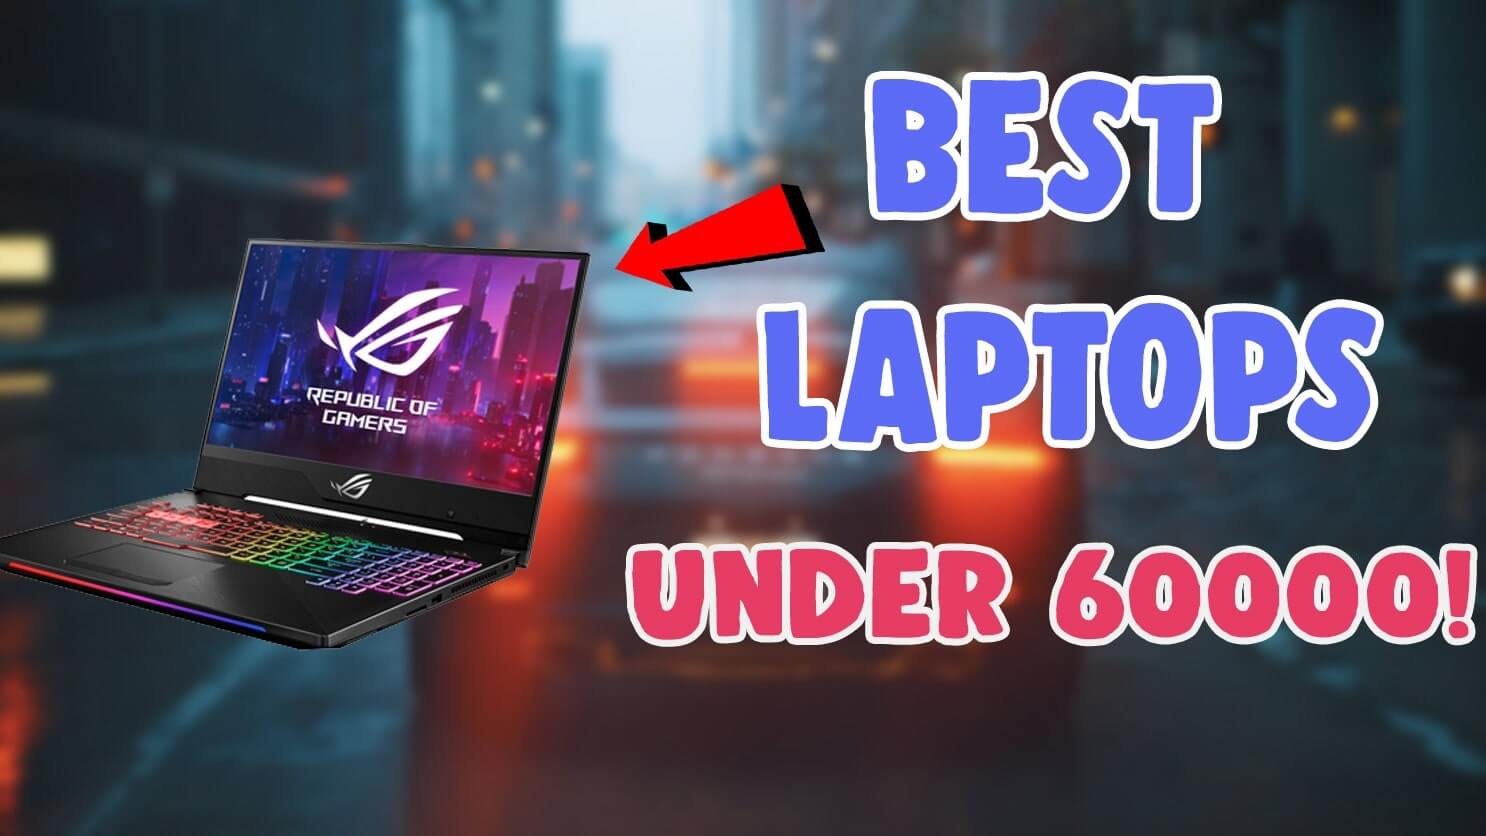 Top 5 Best Laptop Under 60000 in India